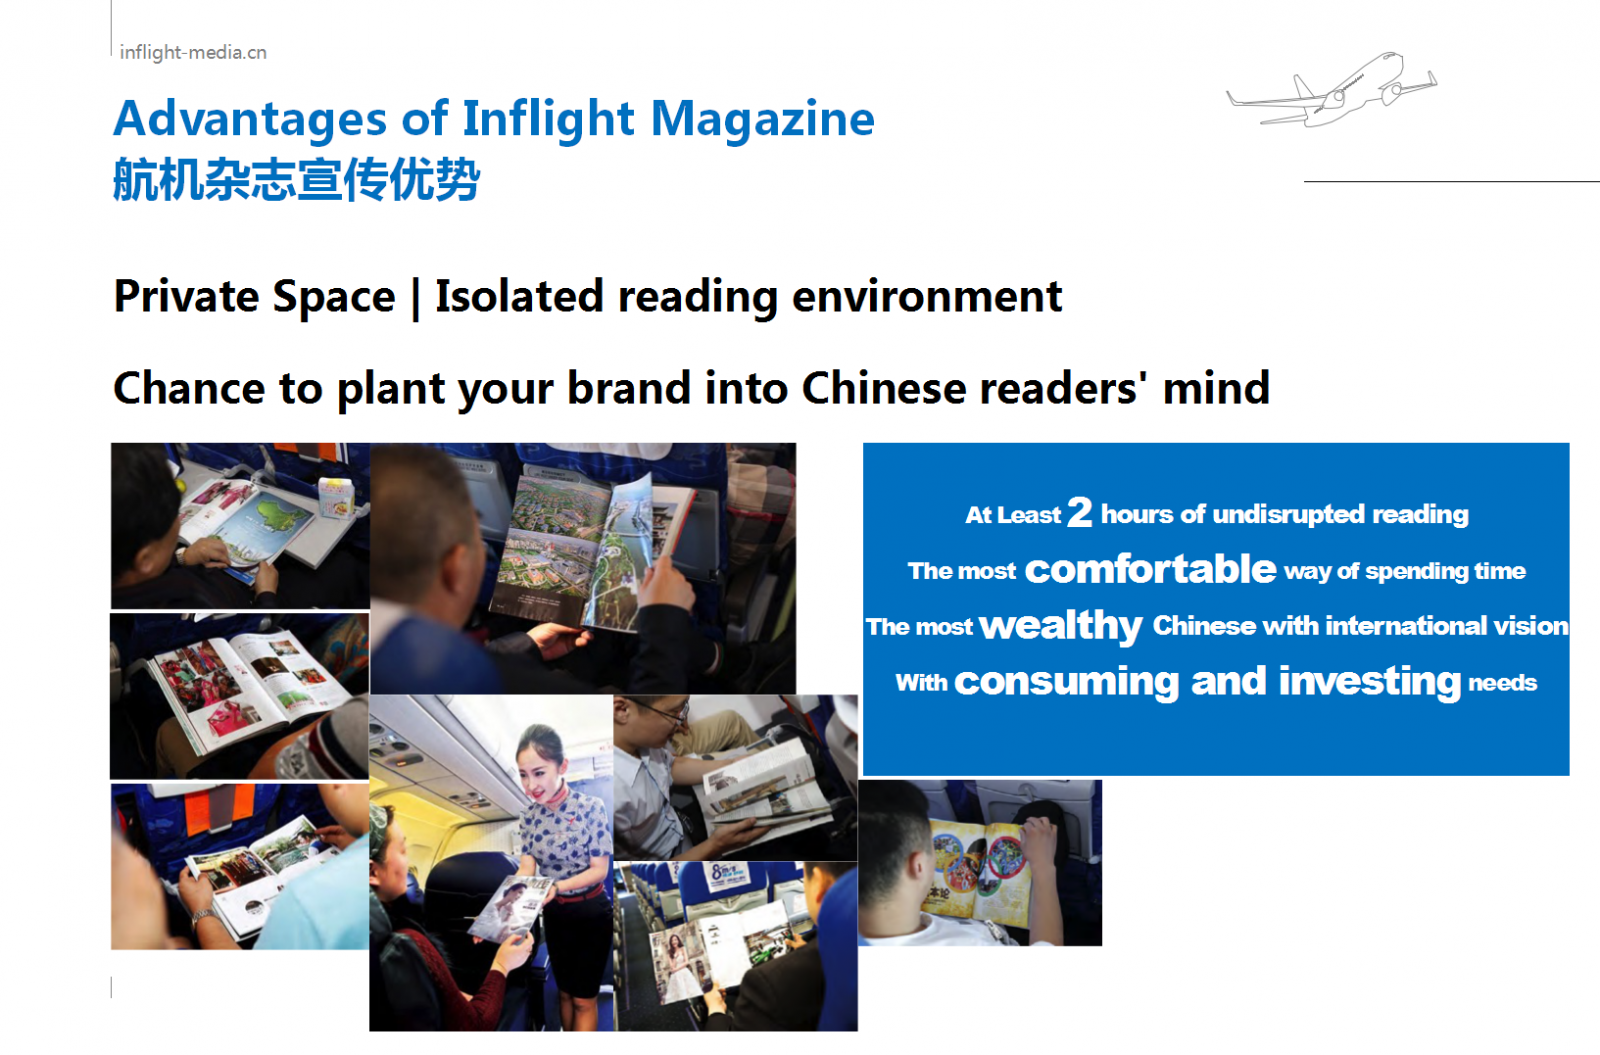 Shanghai Airlines inflight magazine